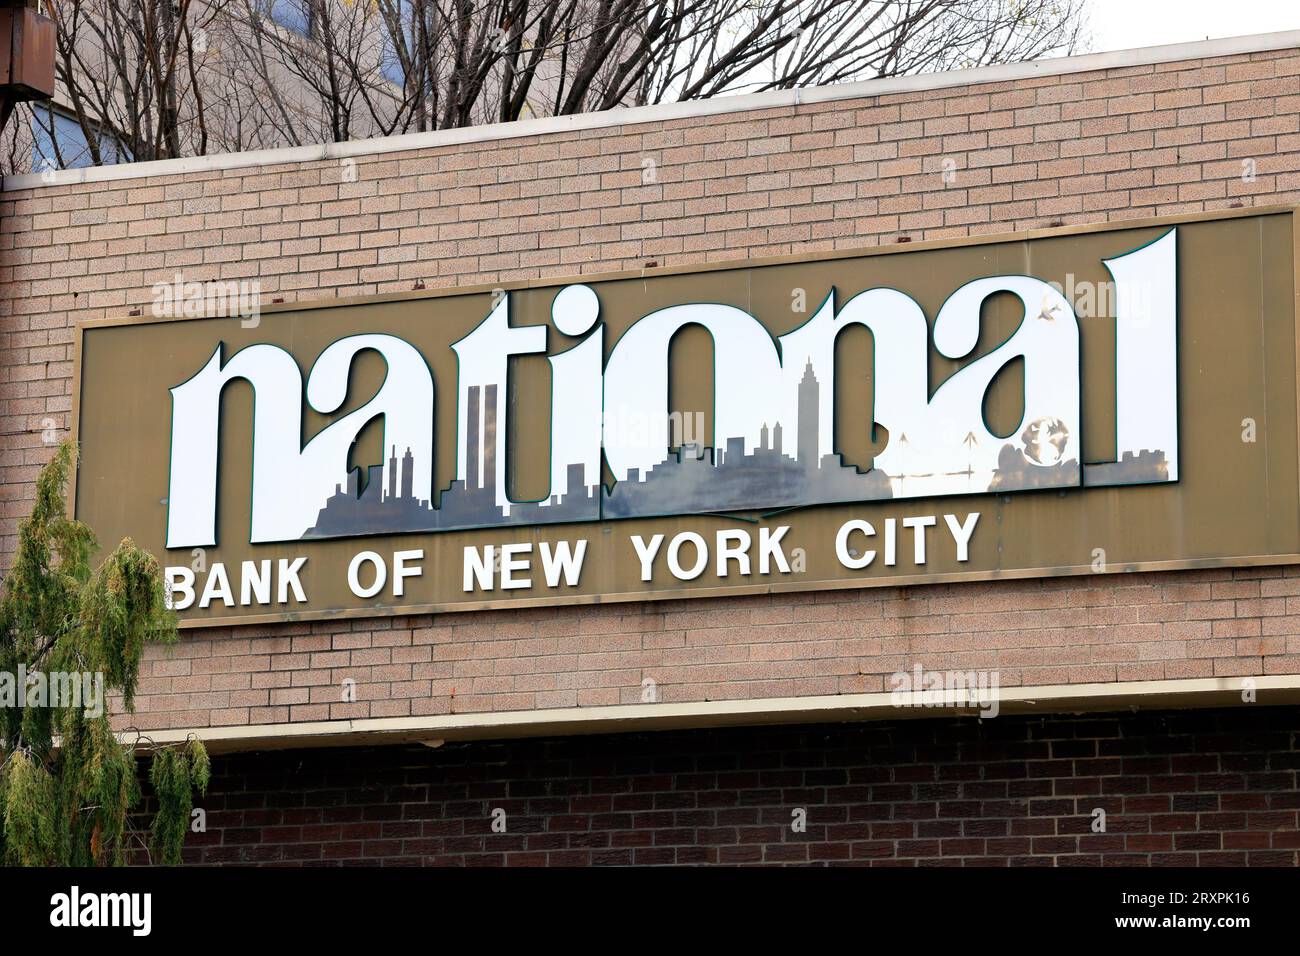 Beschilderung für National Bank of New York City, 136-29 38th Ave, Flushing, Queens, New York City. Stockfoto